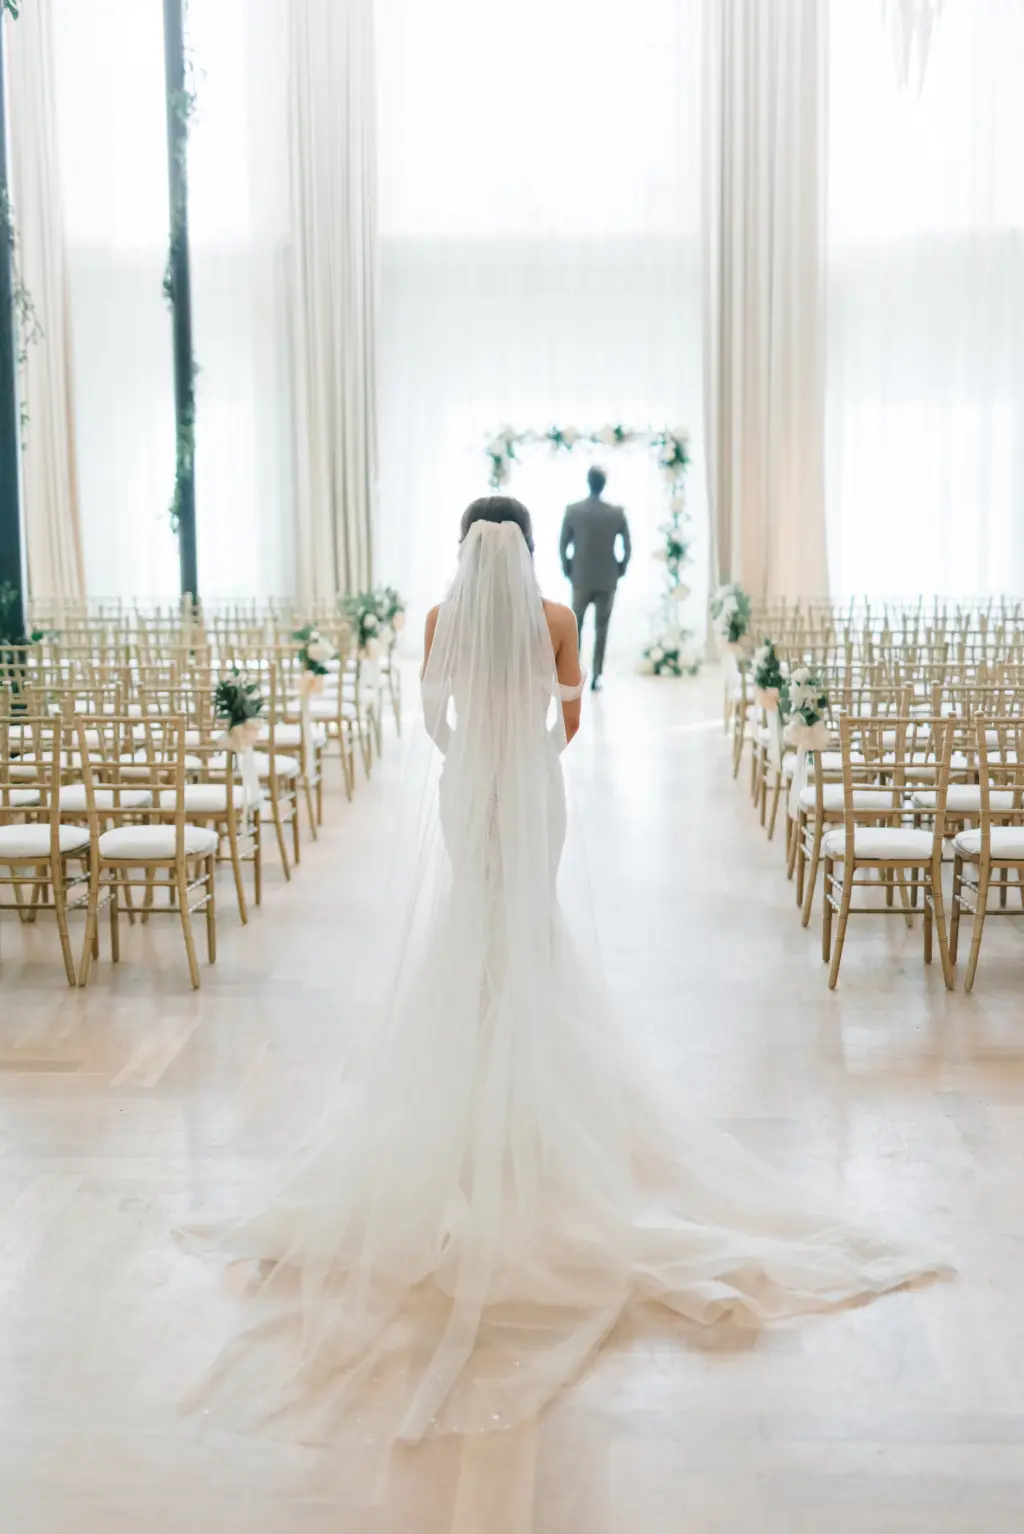 Bride and Groom First Look Wedding Ceremony Portrait | Venue Hotel Haya | Tampa Wedding Planner Eventfull Weddings